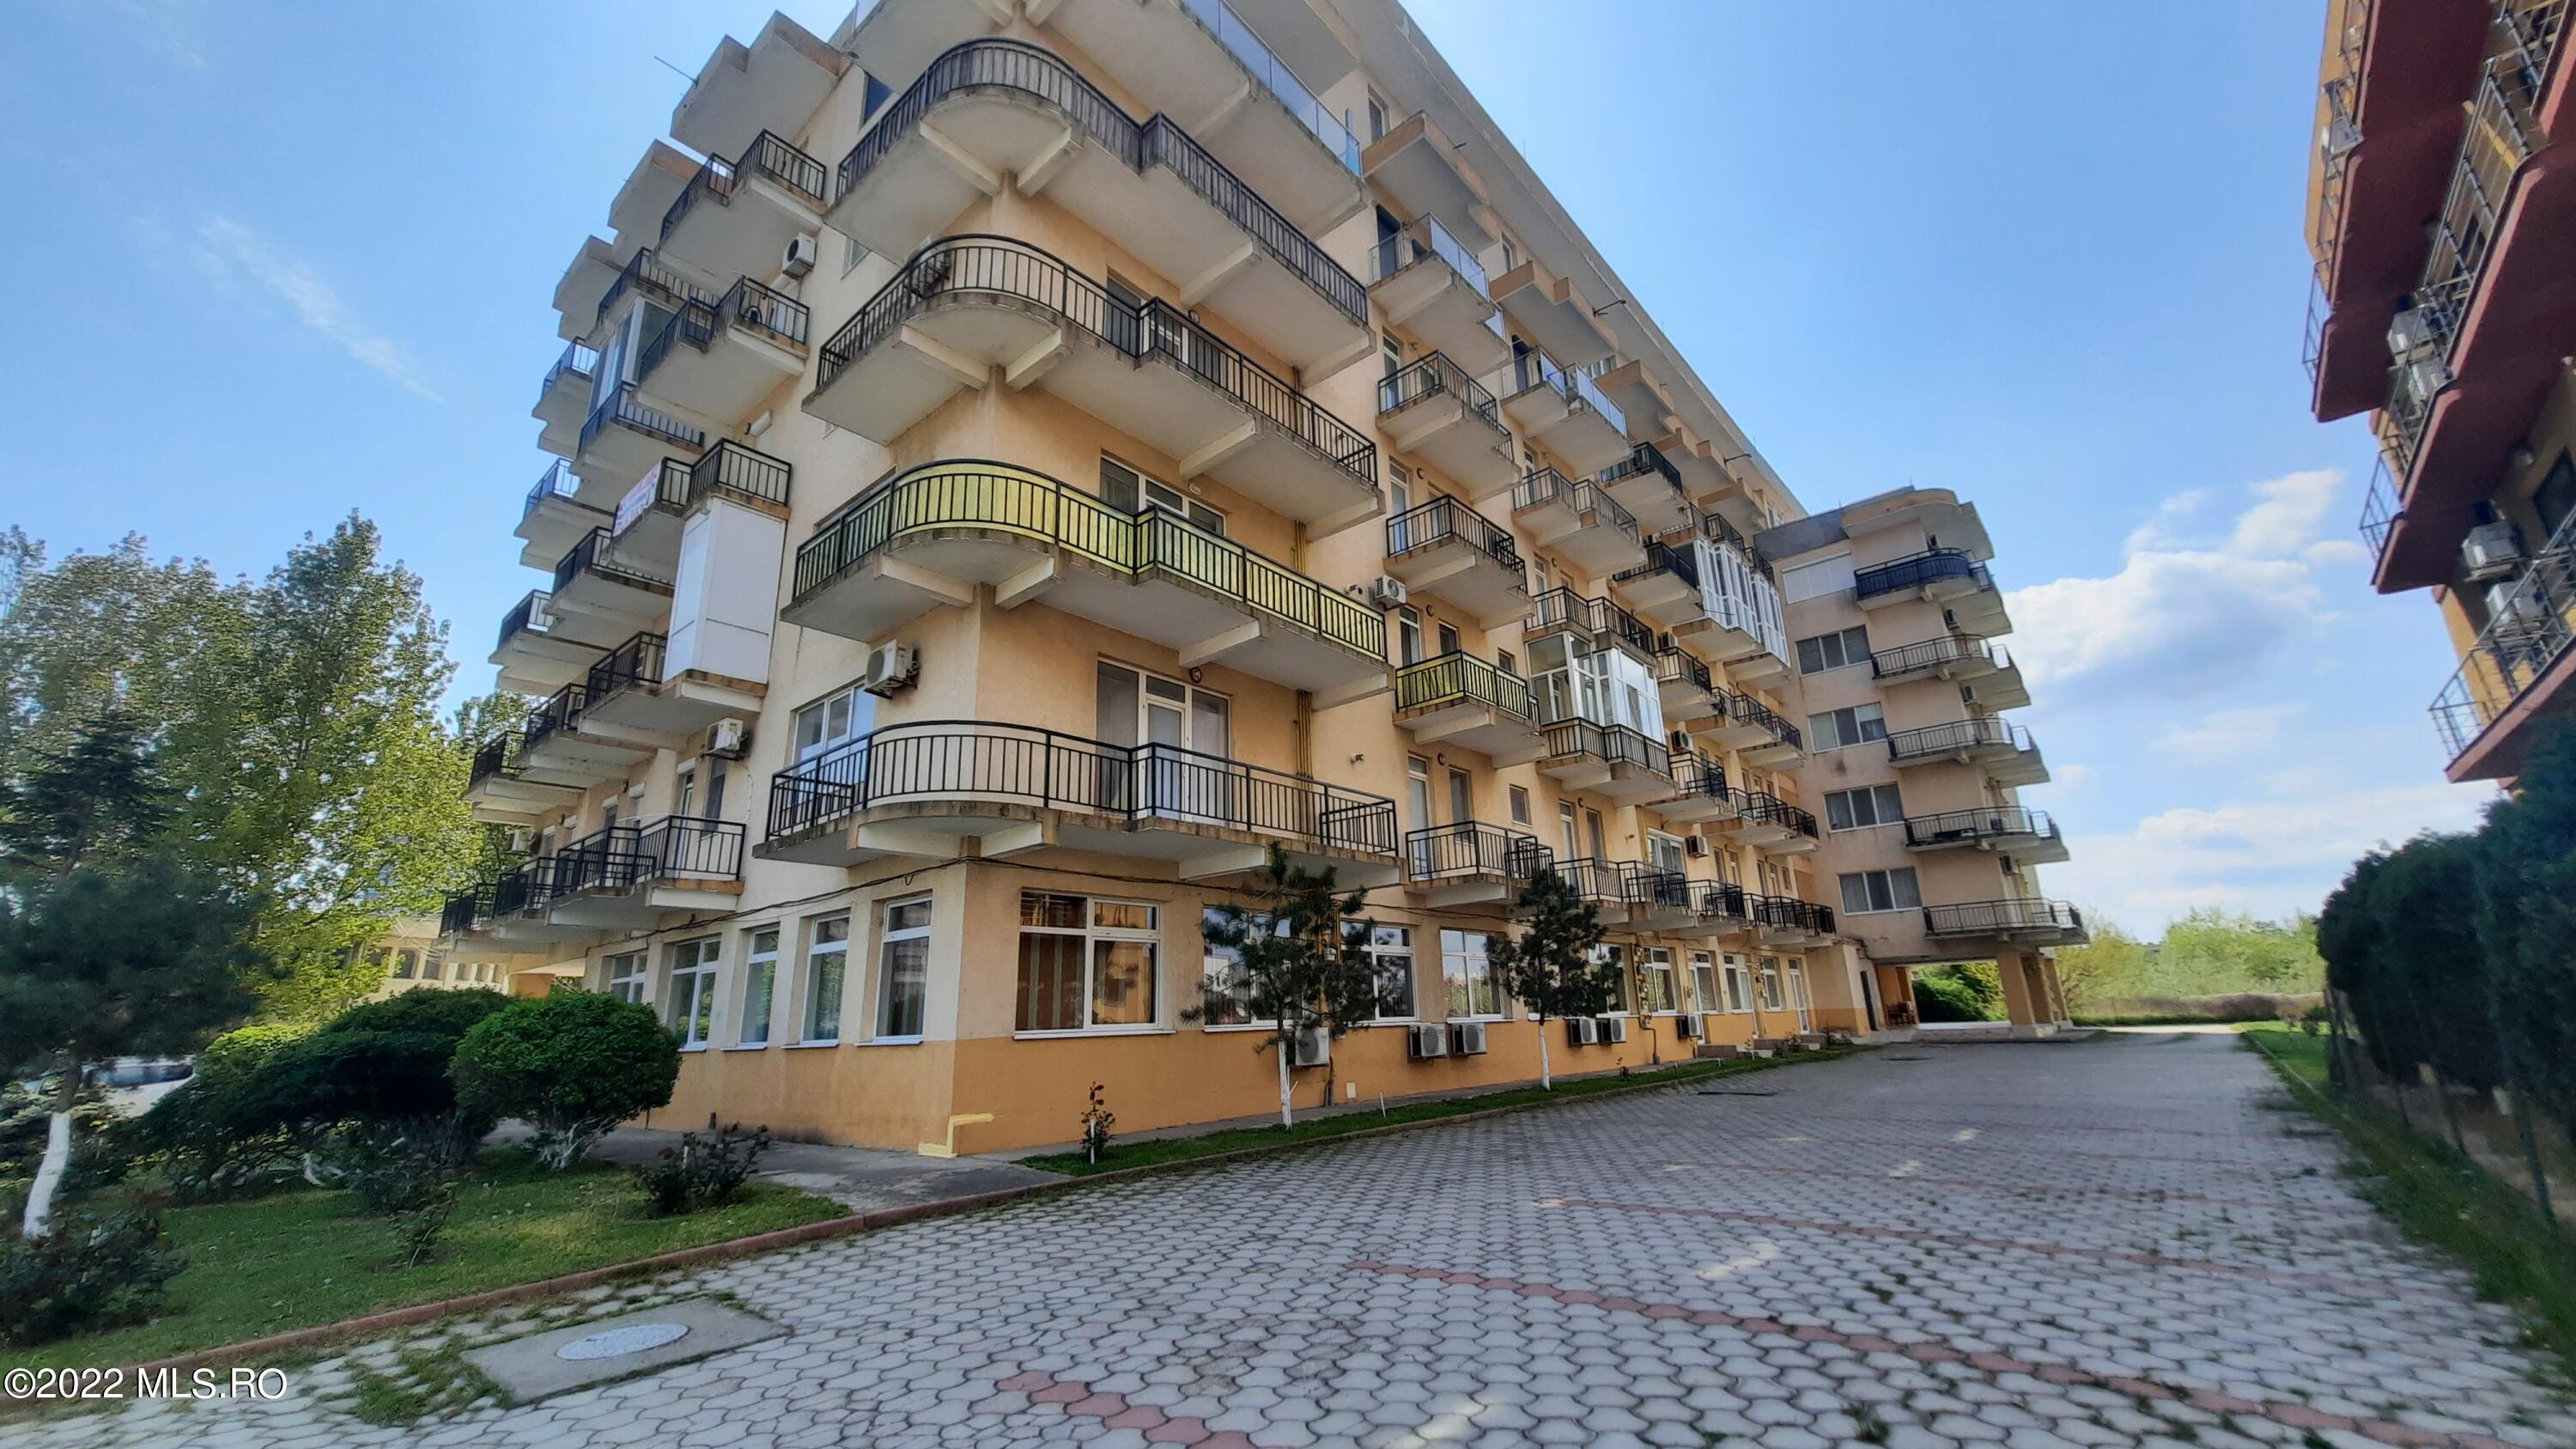                                             Vanzare -                                                                                     Apartament 3 camere                                                                                 - Mamaia Nord
                                        